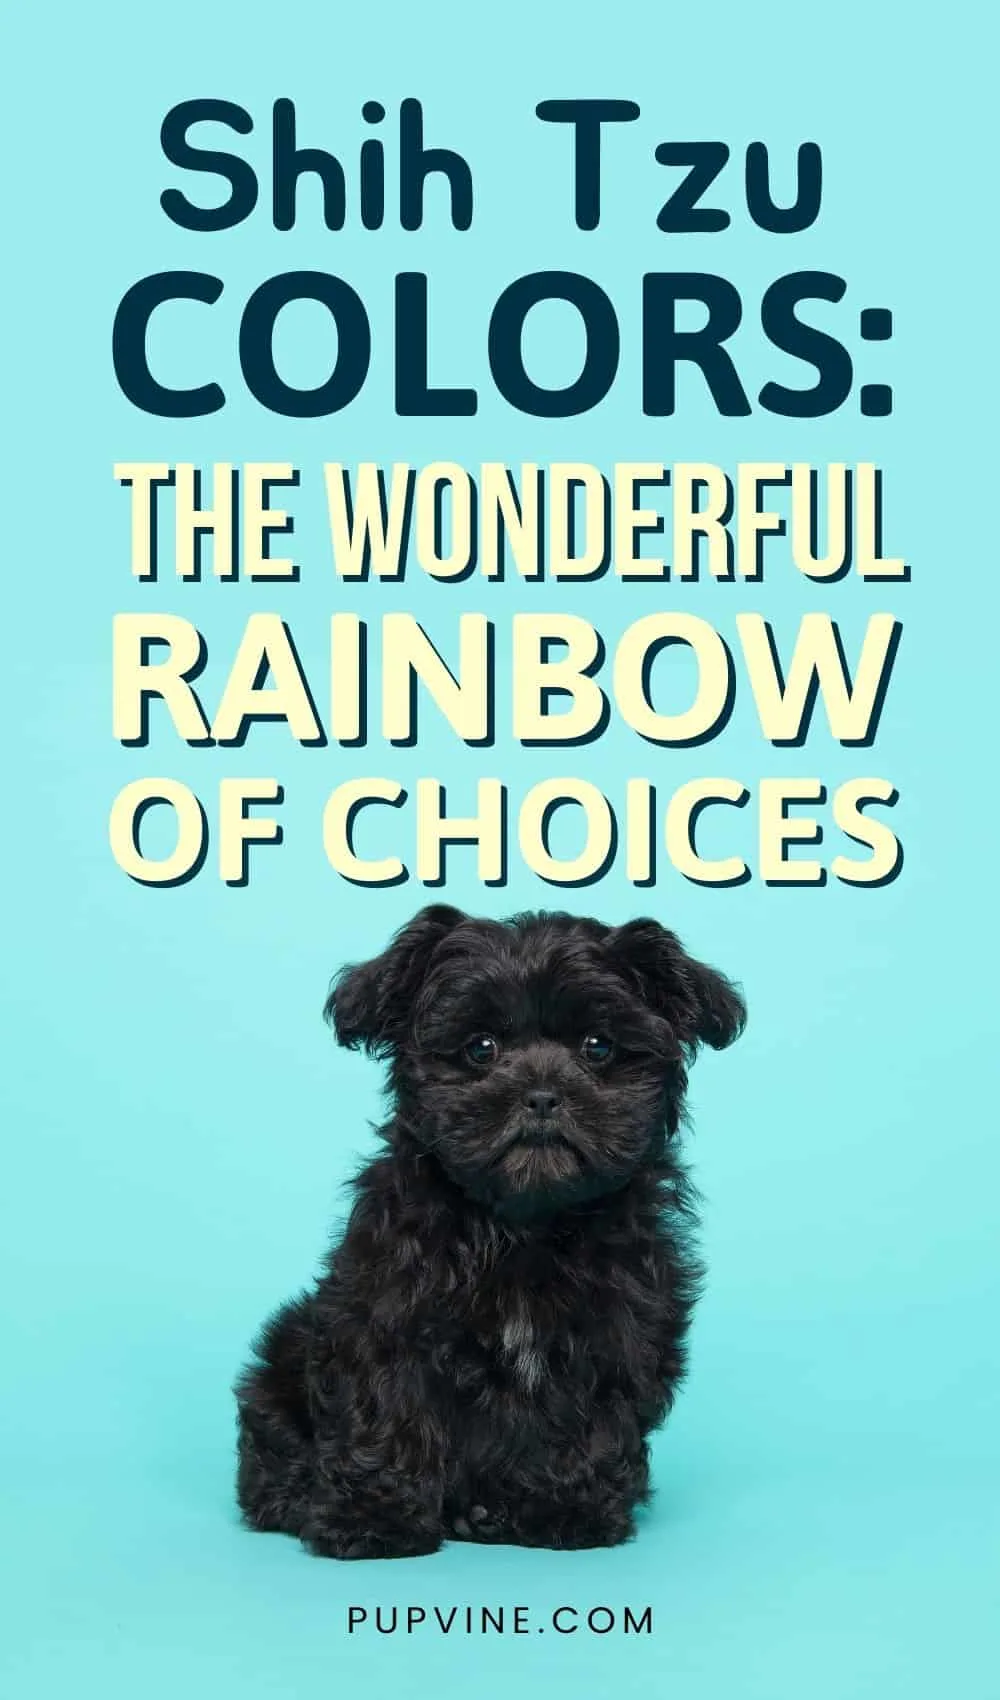 Shih Tzu Colors The Wonderful Rainbow Of Choices